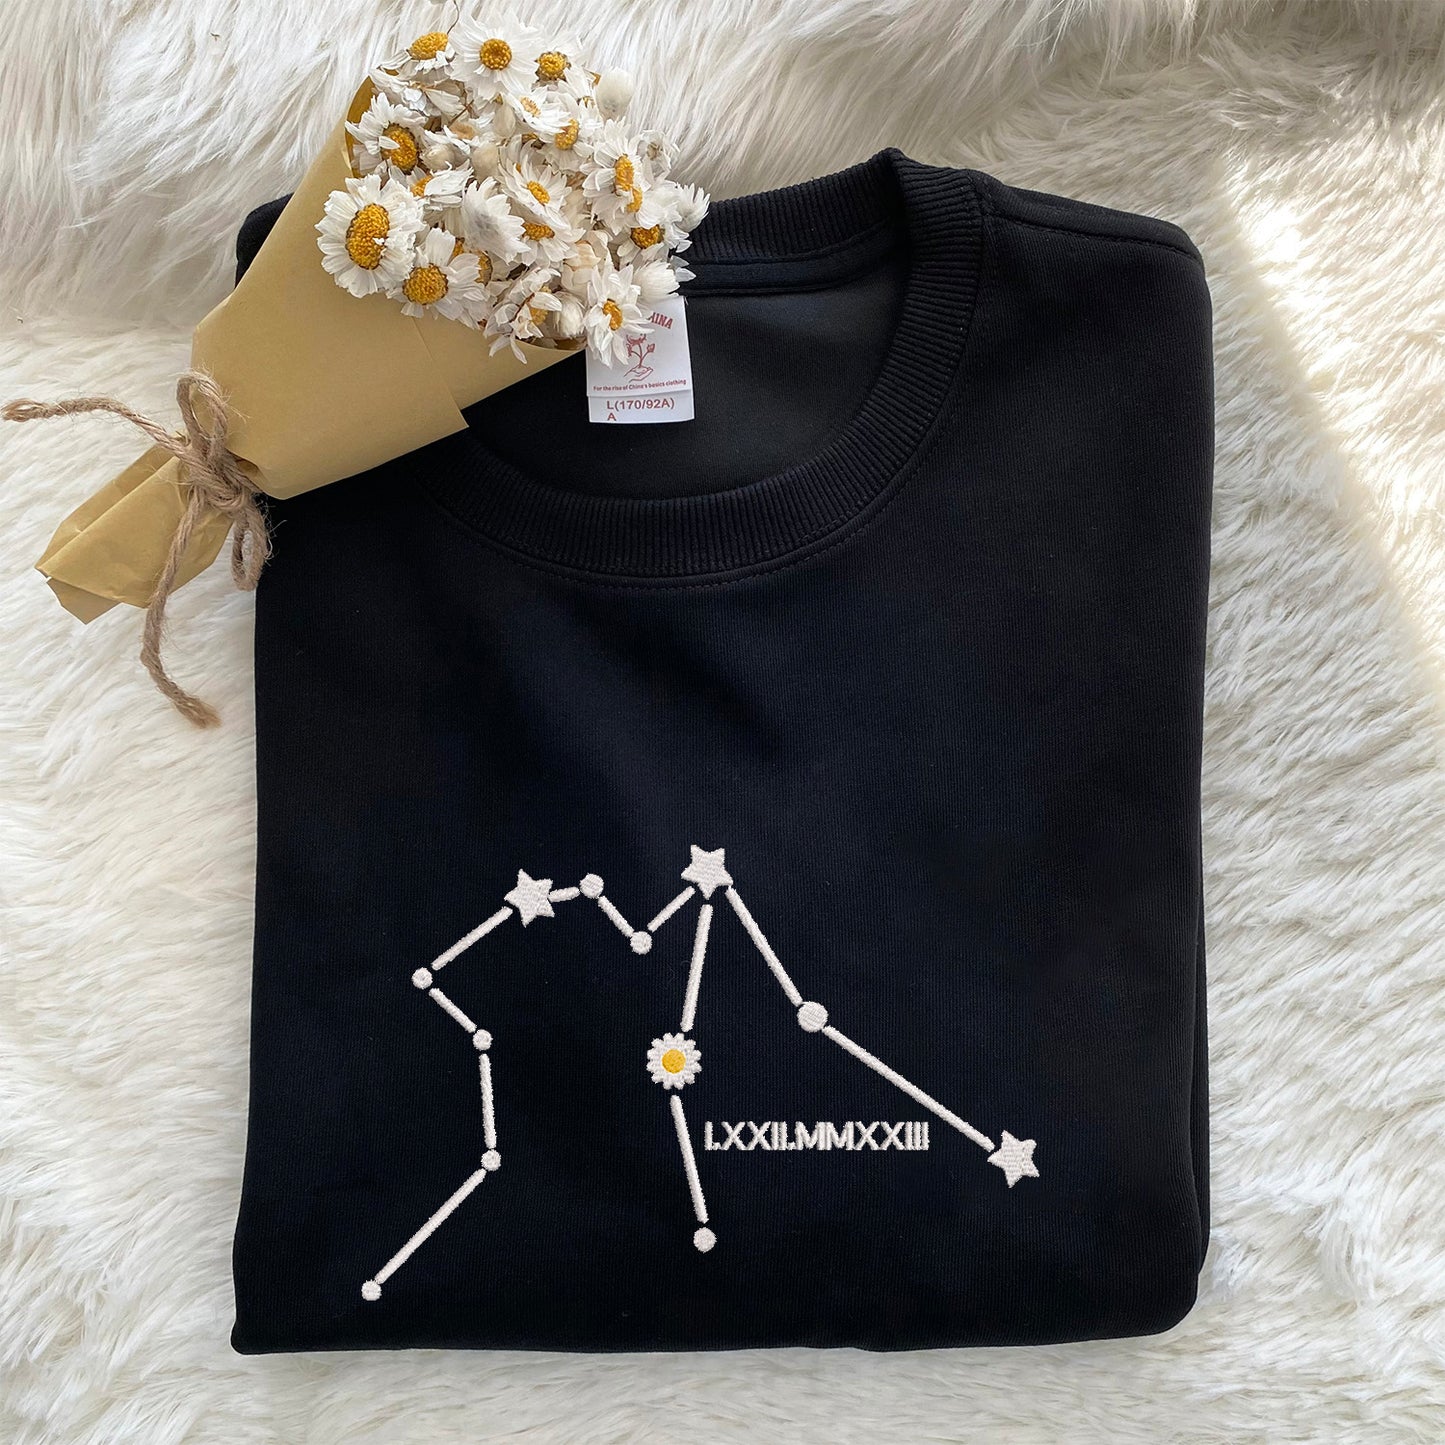 Customized constellation pattern sweatshirts and hoodies